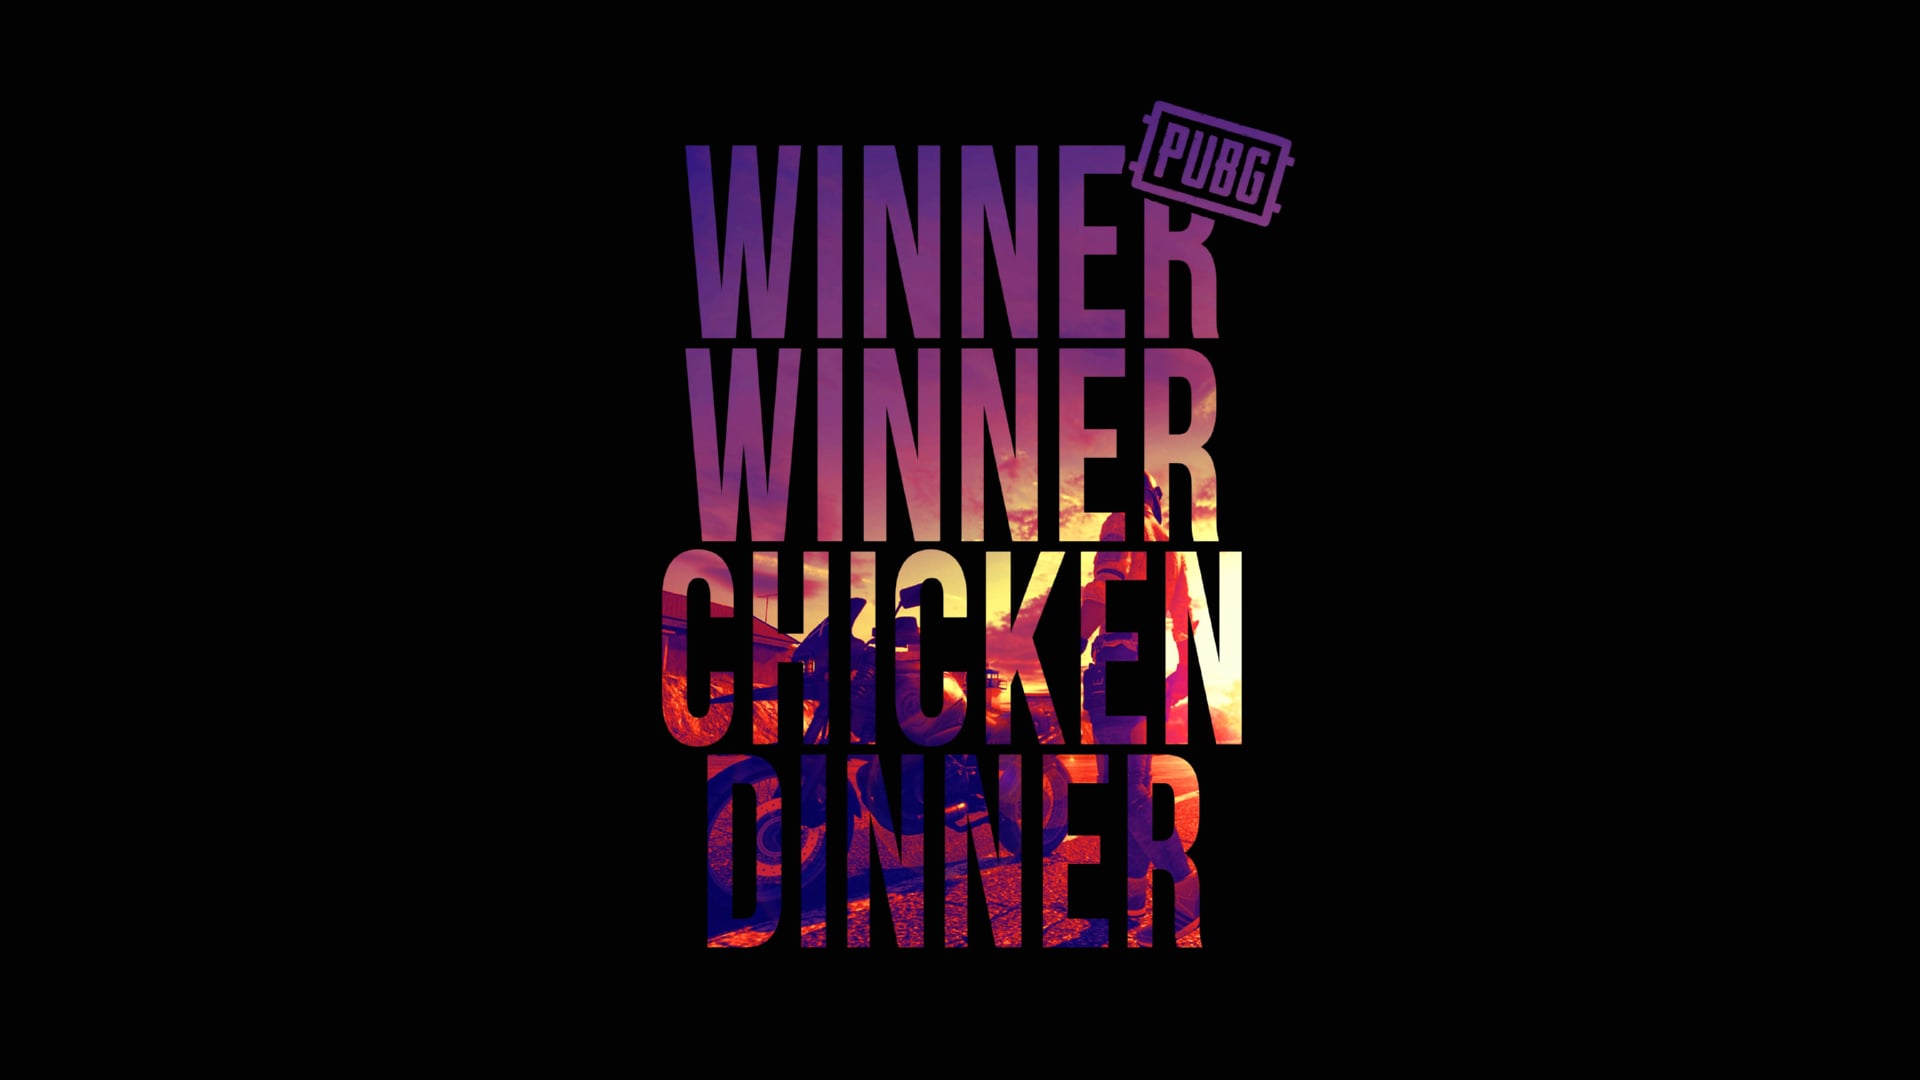 Winner Winner Chicken Dinner at 1024 x 768 size wallpapers HD quality